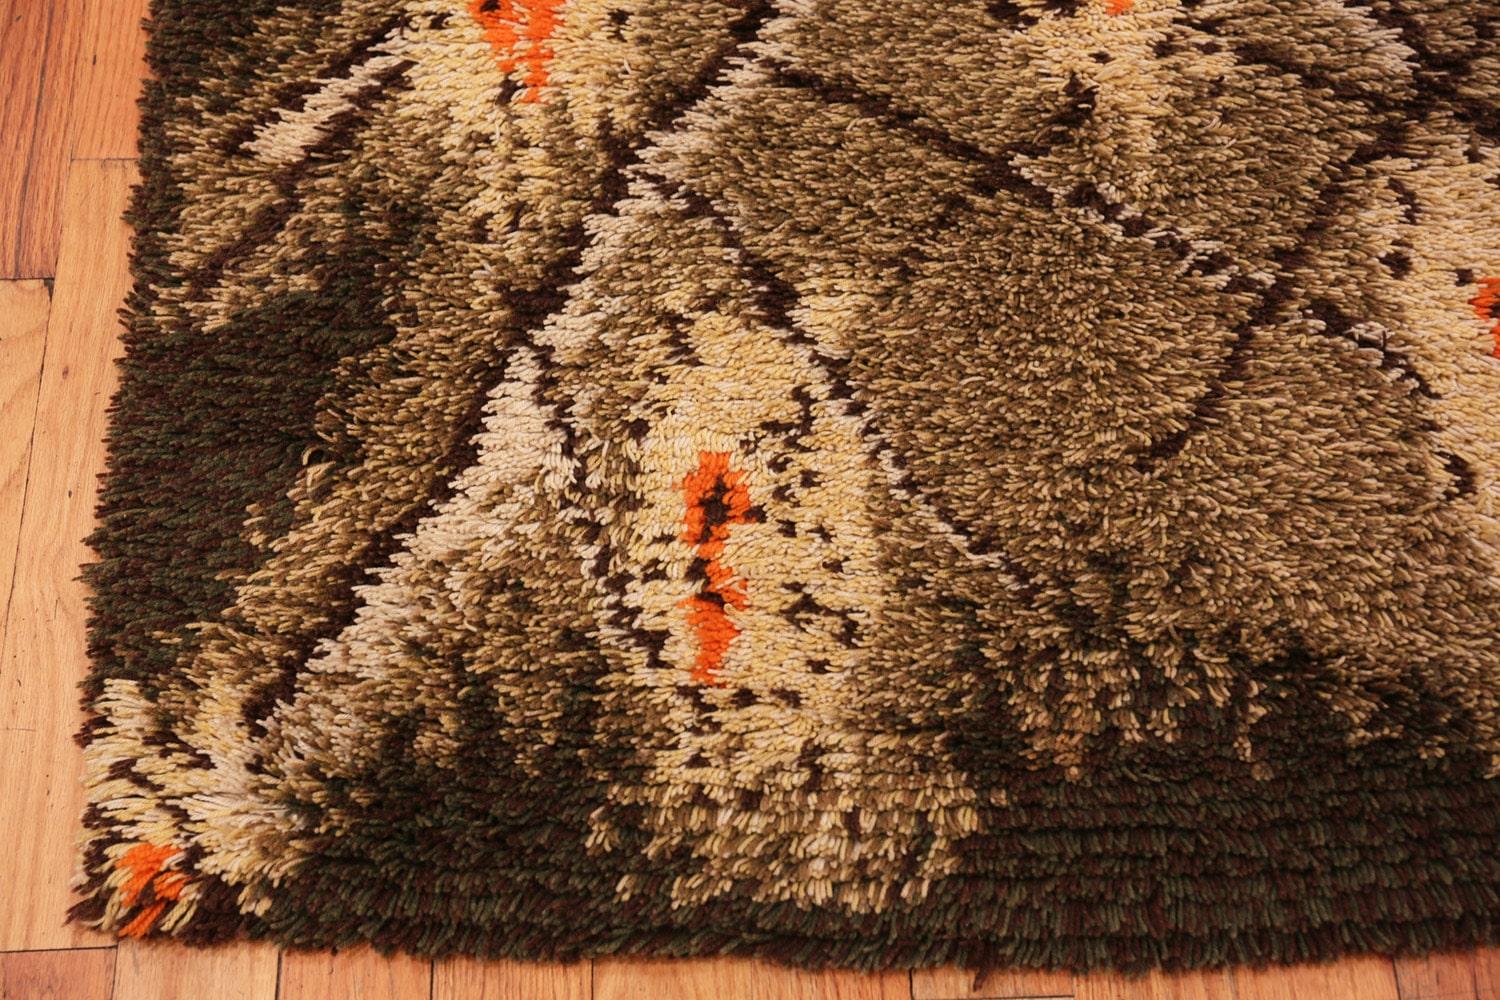 Vintage Rya rug, origin: Finland, circa mid-20th century. Size: 3 ft 6 in x 5 ft (1.07 m x 1.52 m)

